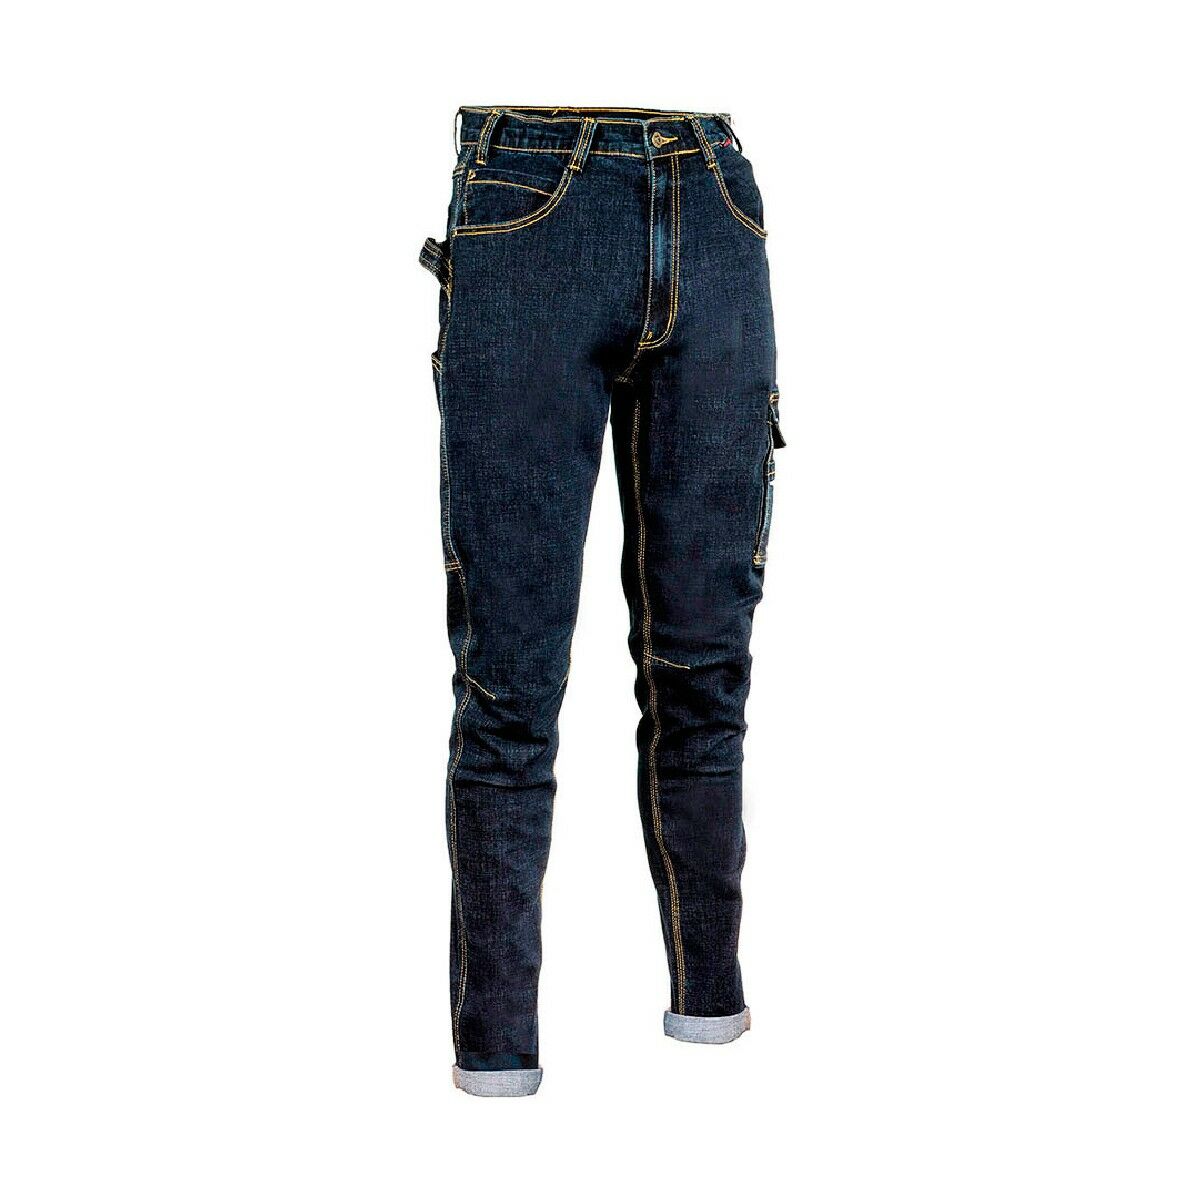 Pantaloni de siguranță Cofra Cabries Profesionist Bleumarin - Mărime 58